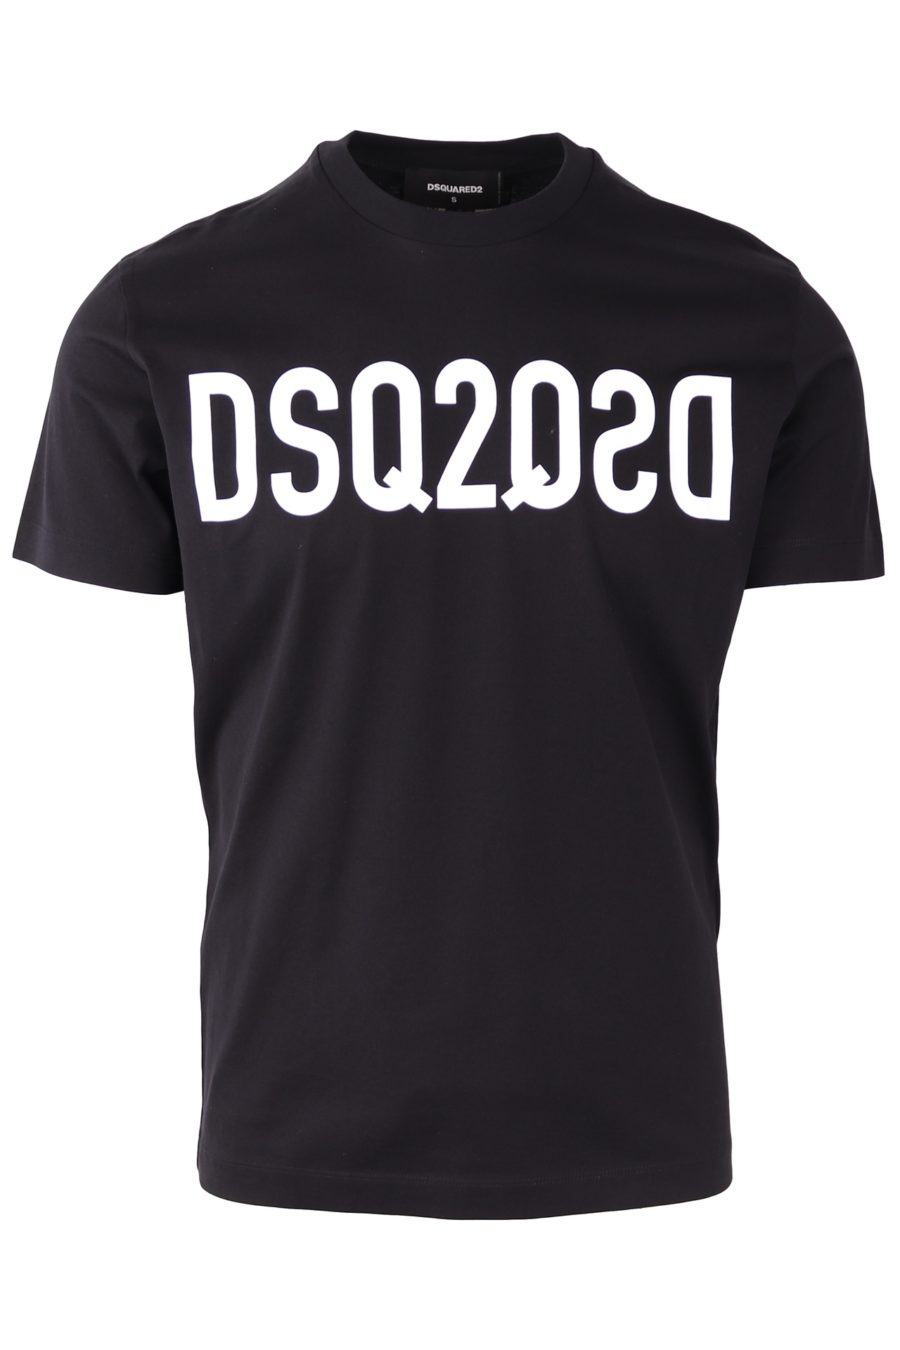 Camiseta Dsquared2 negra logo DSQ2 con efecto espejo - eab36e4b7ed9fb6ba11b5fe569206985e7d49f92